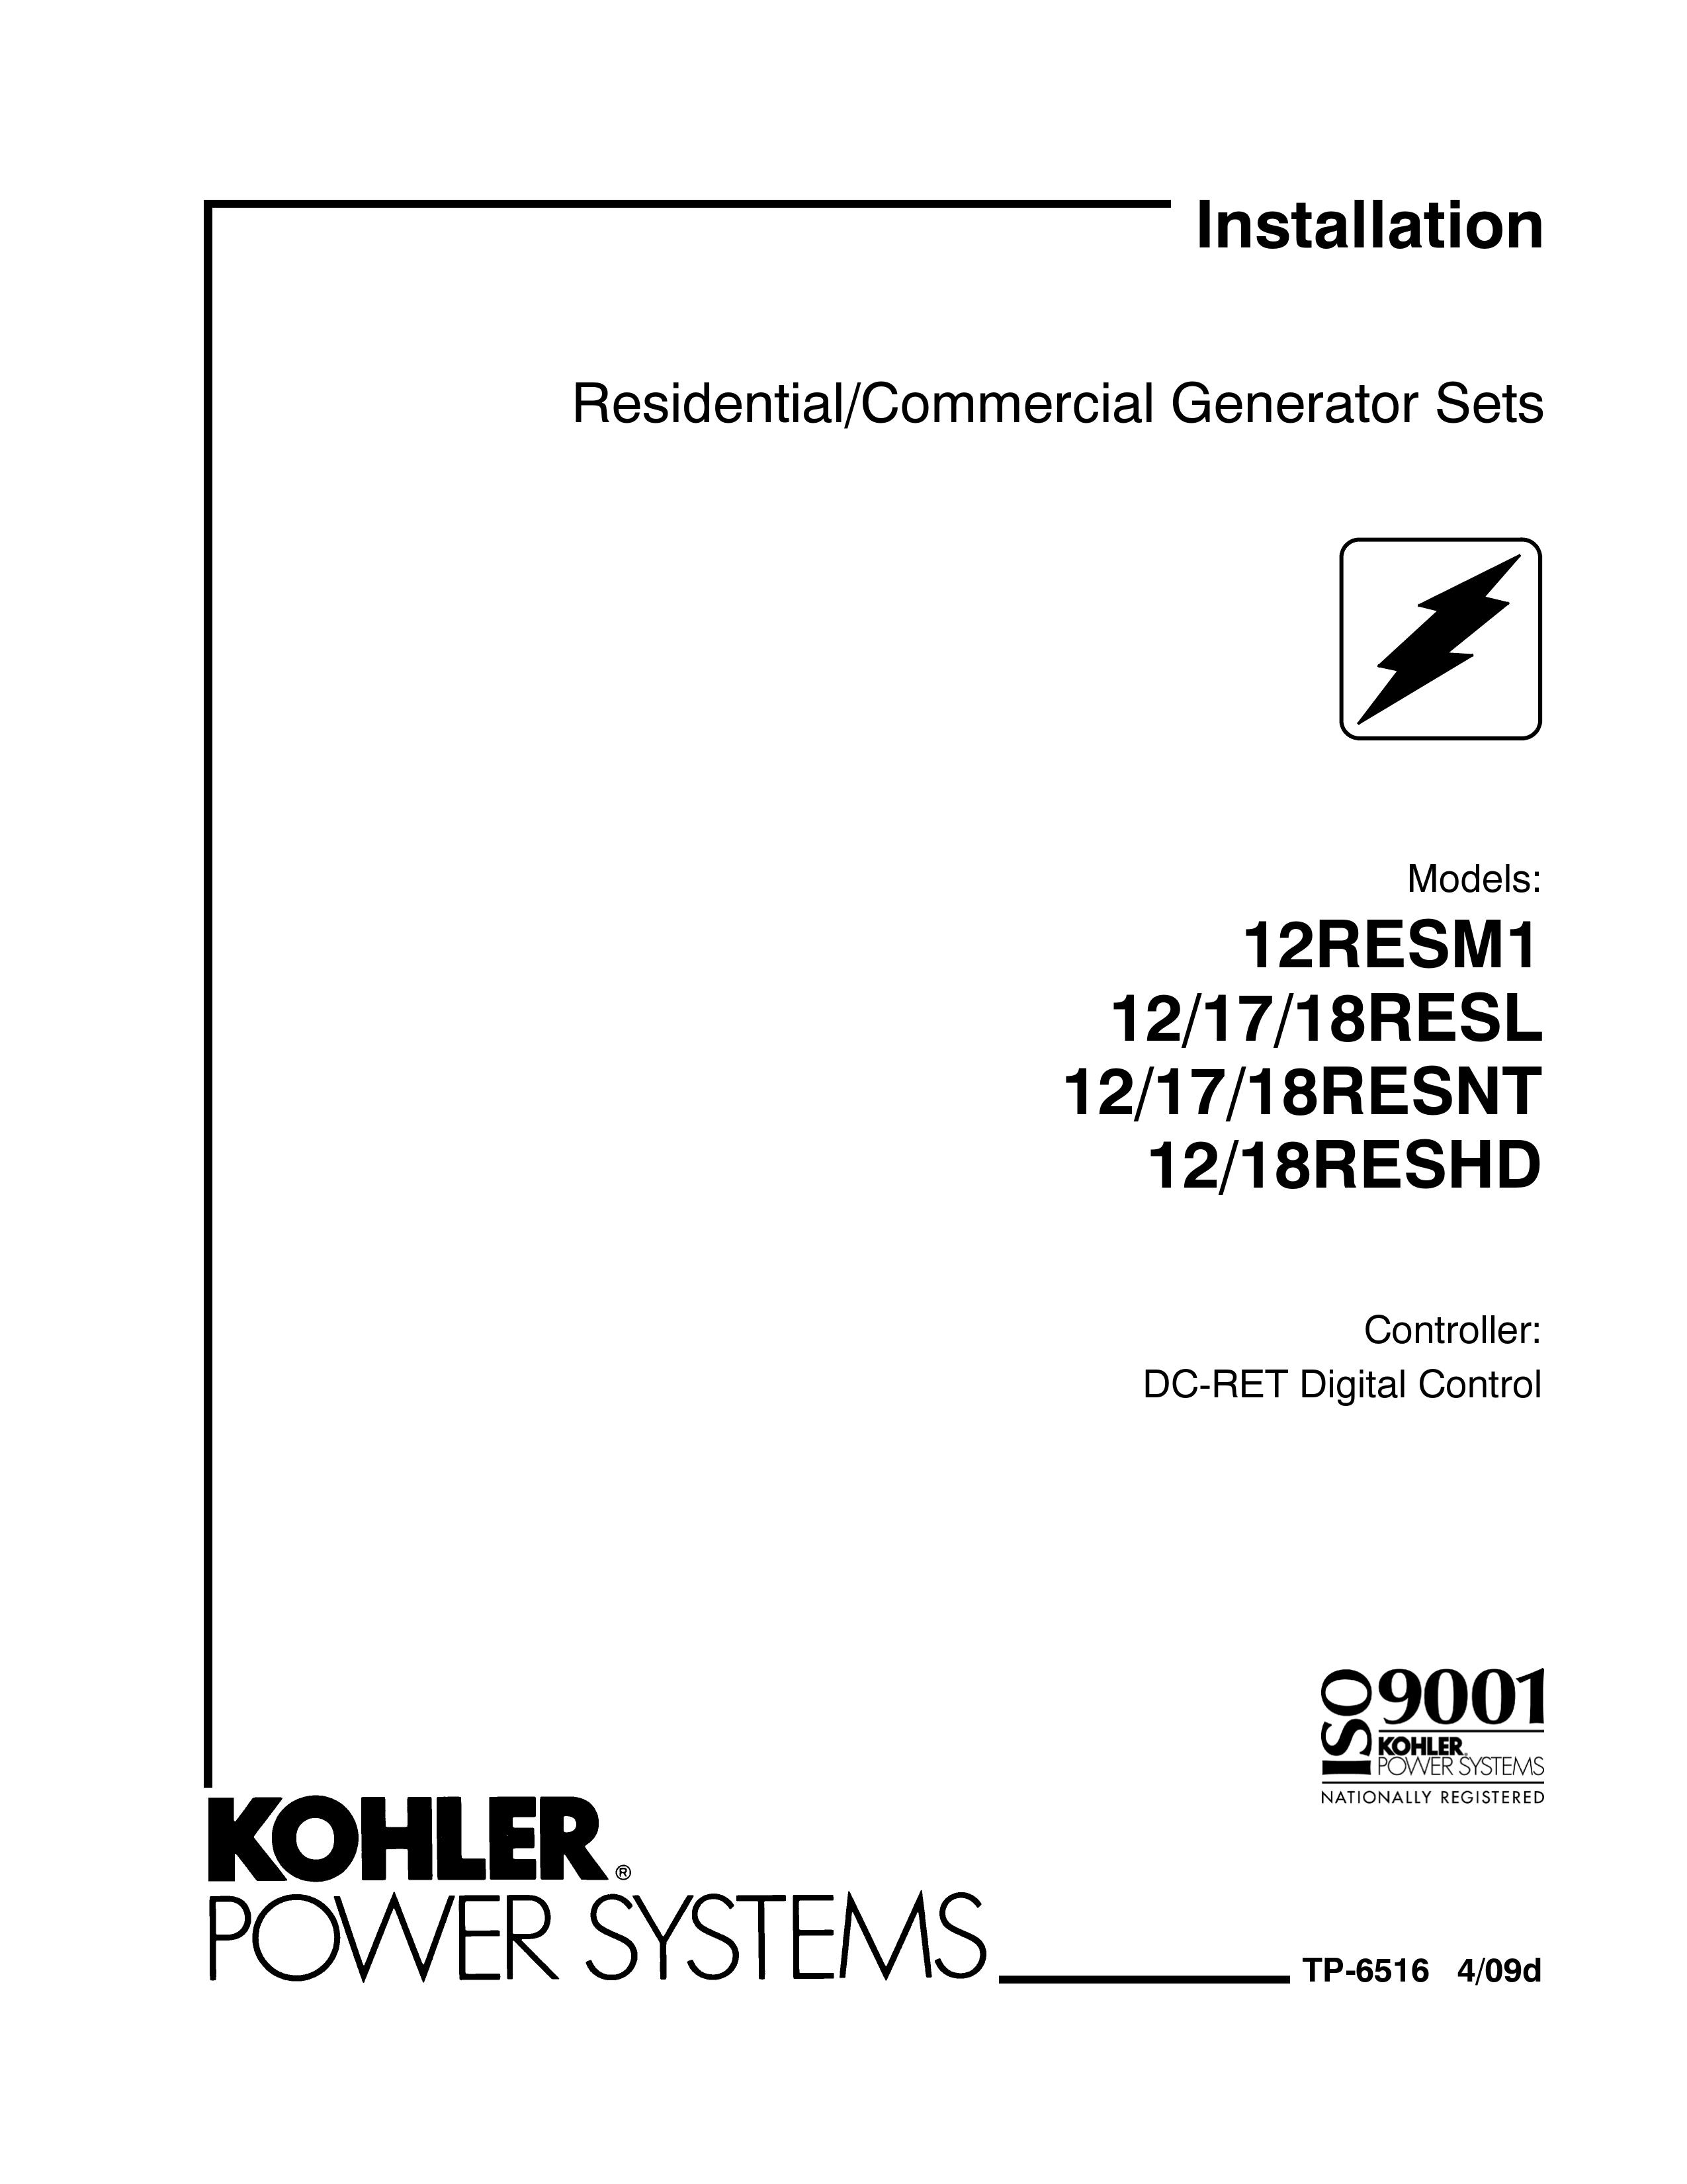 Kohler 12RESM1 Portable Generator User Manual